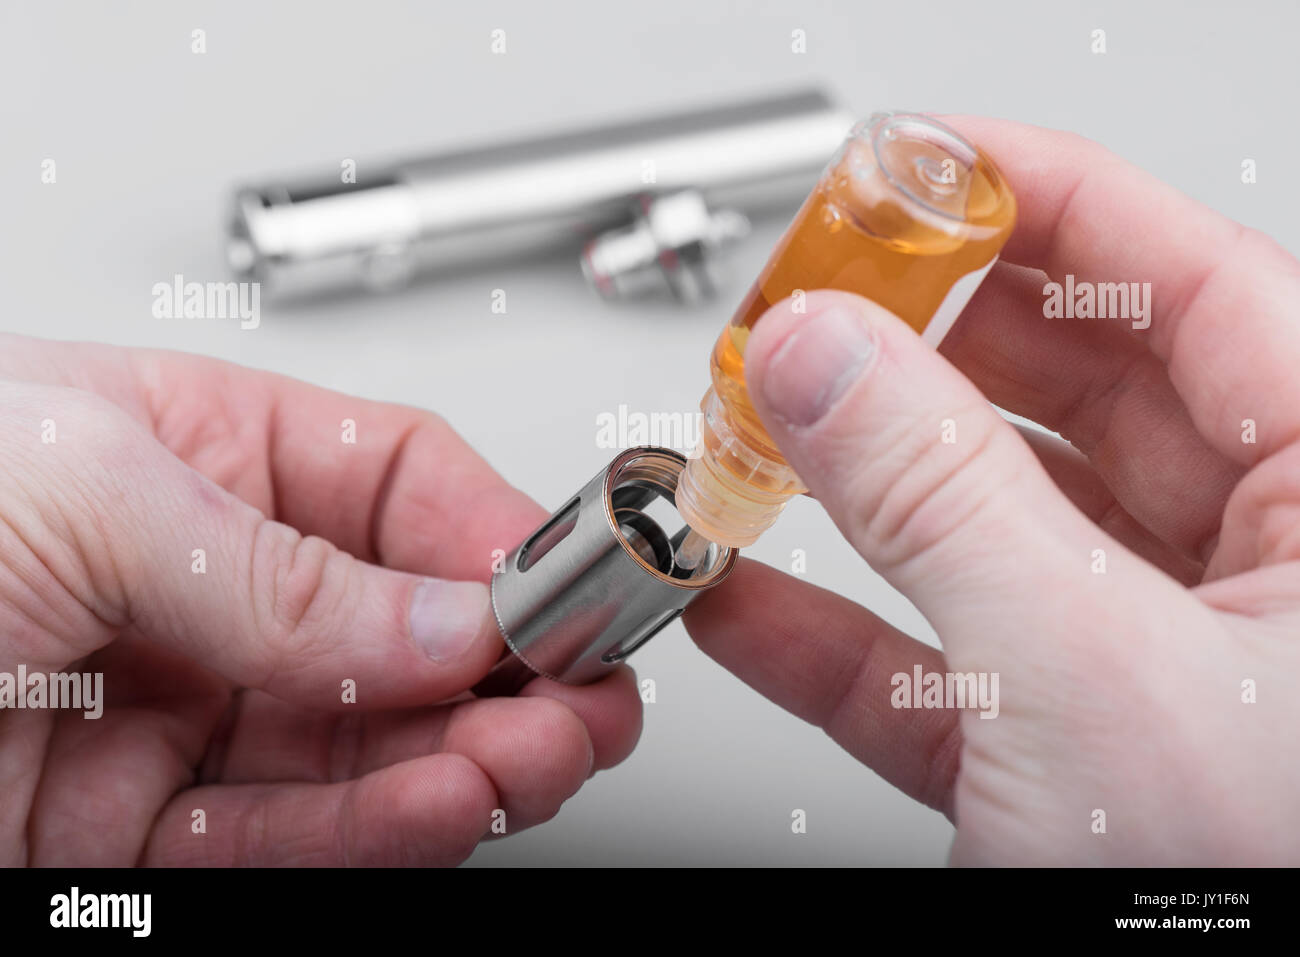 Human hands filling e-cig atomizer with e-liquid Stock Photo